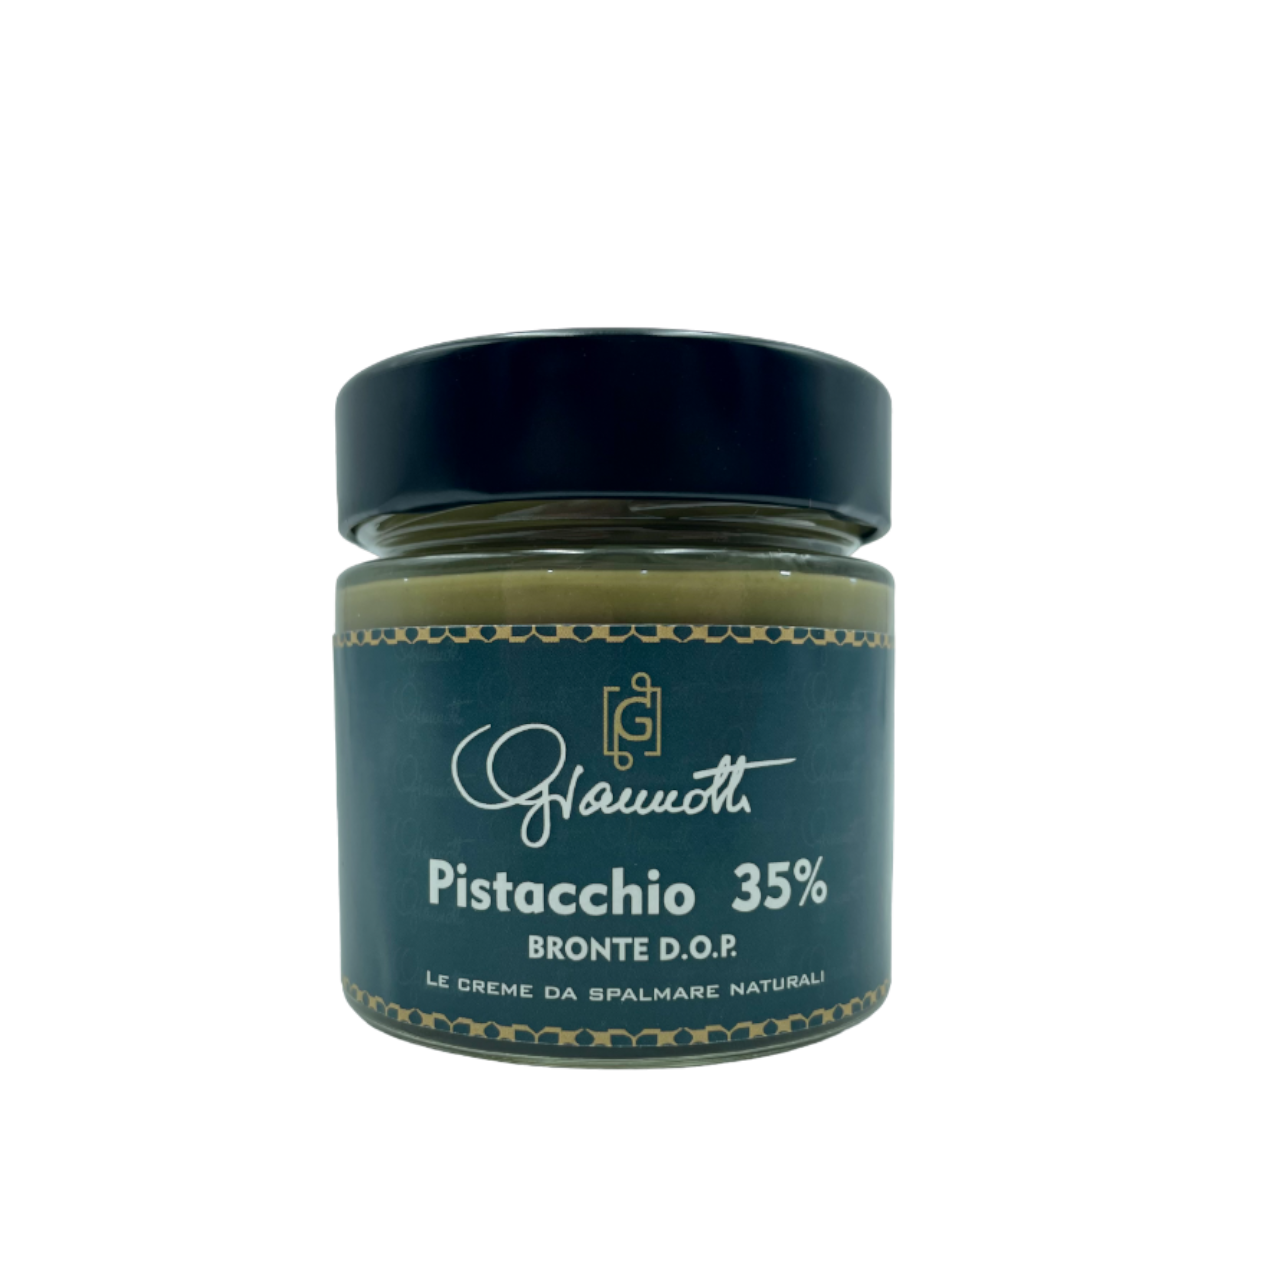 Pistachio 35% Bronte DOP